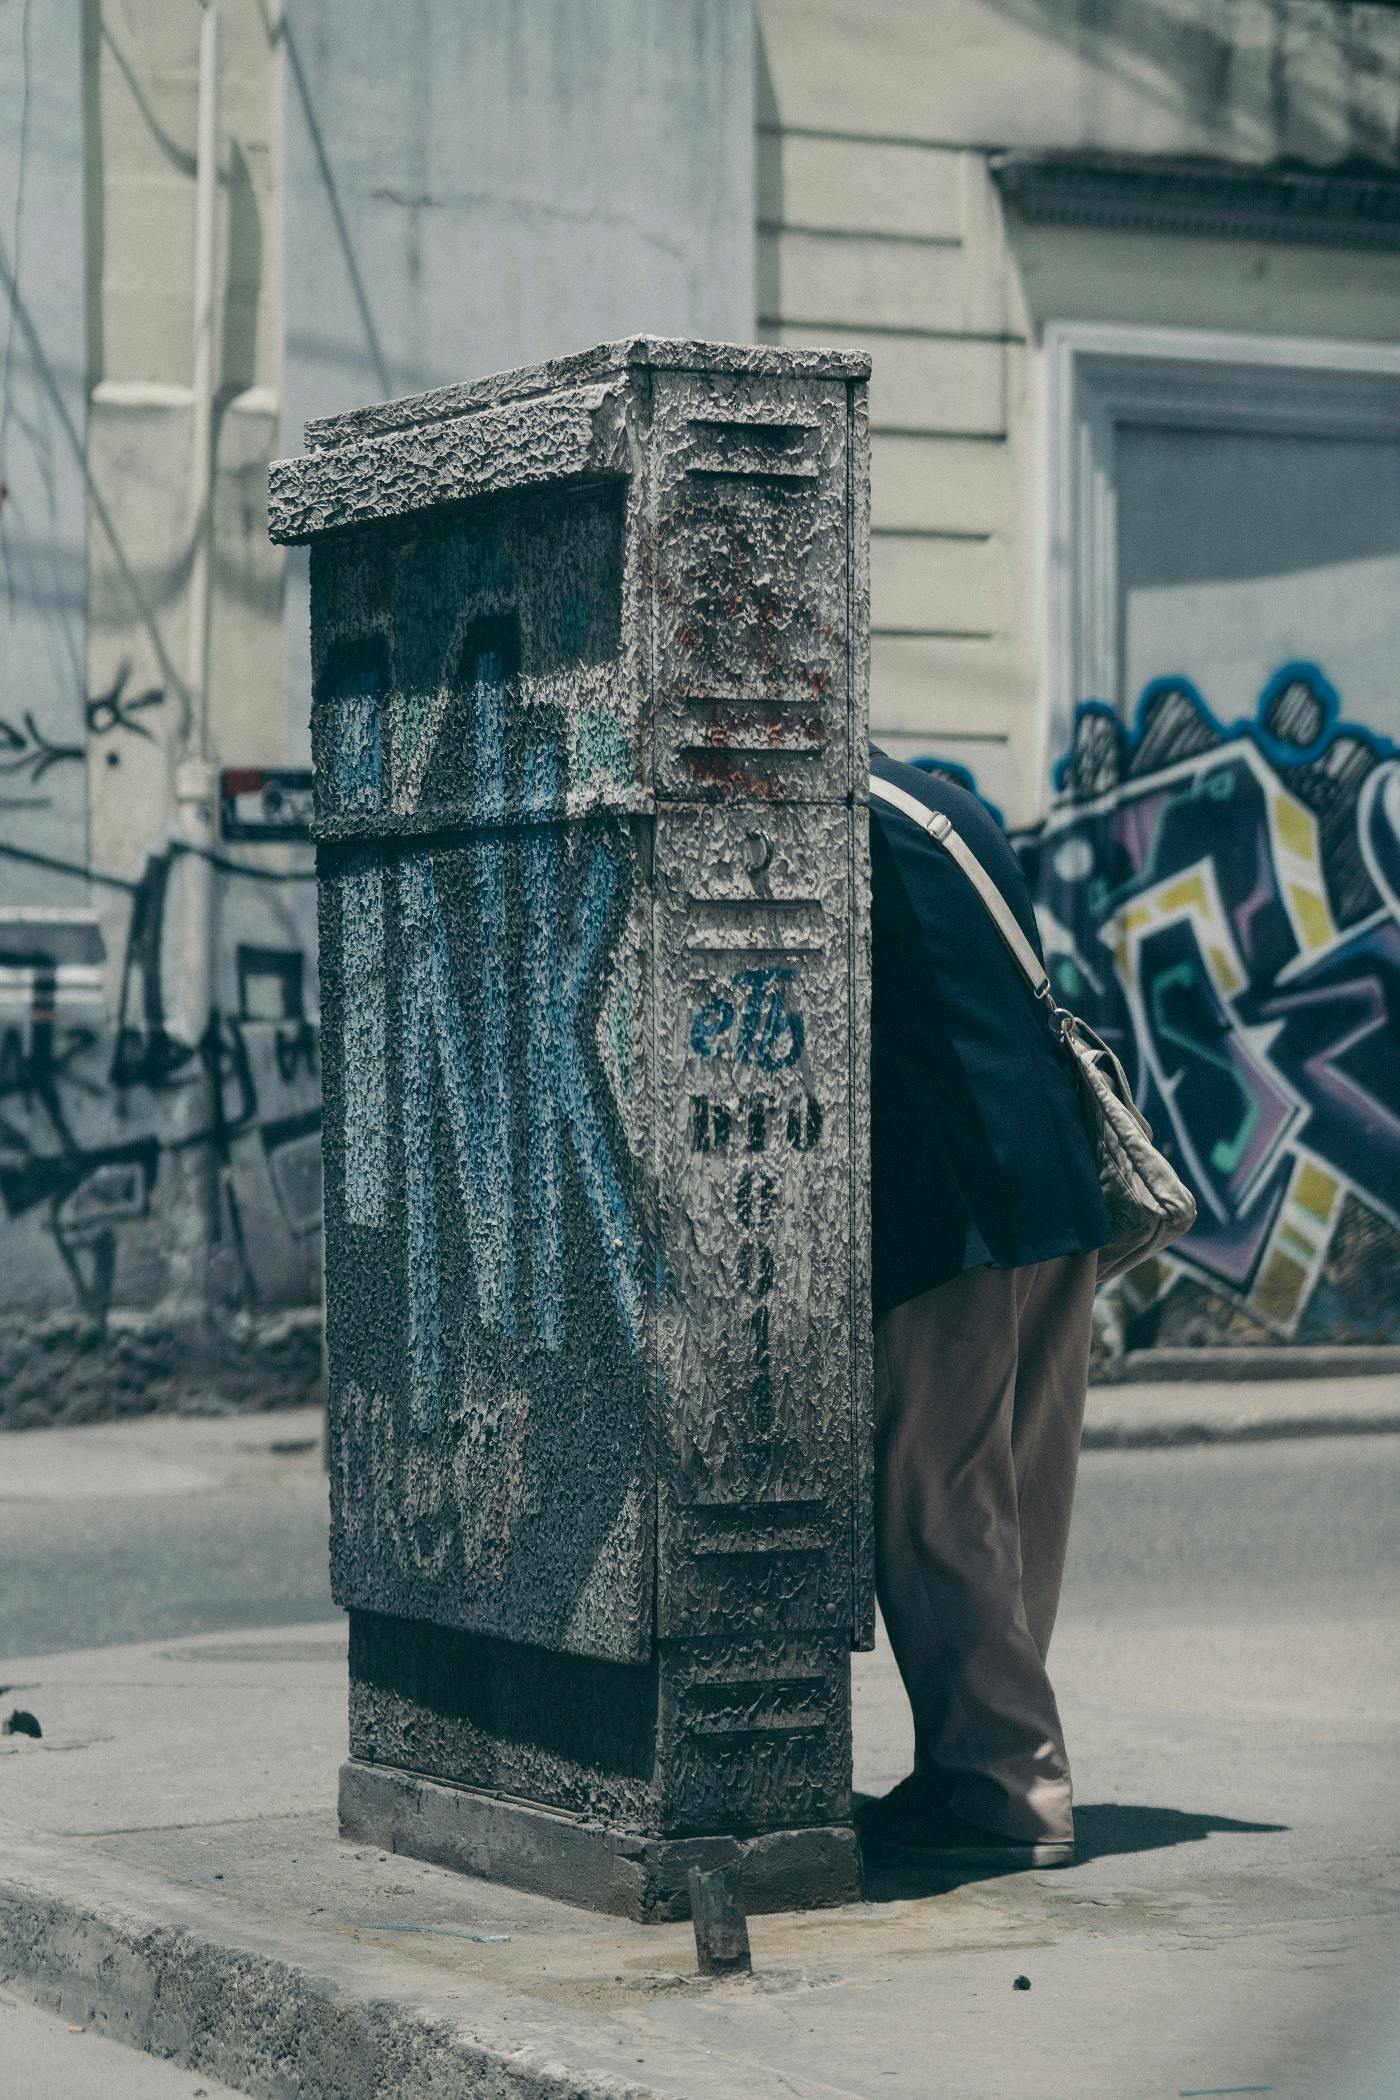 A man hiding behind a concrete wall